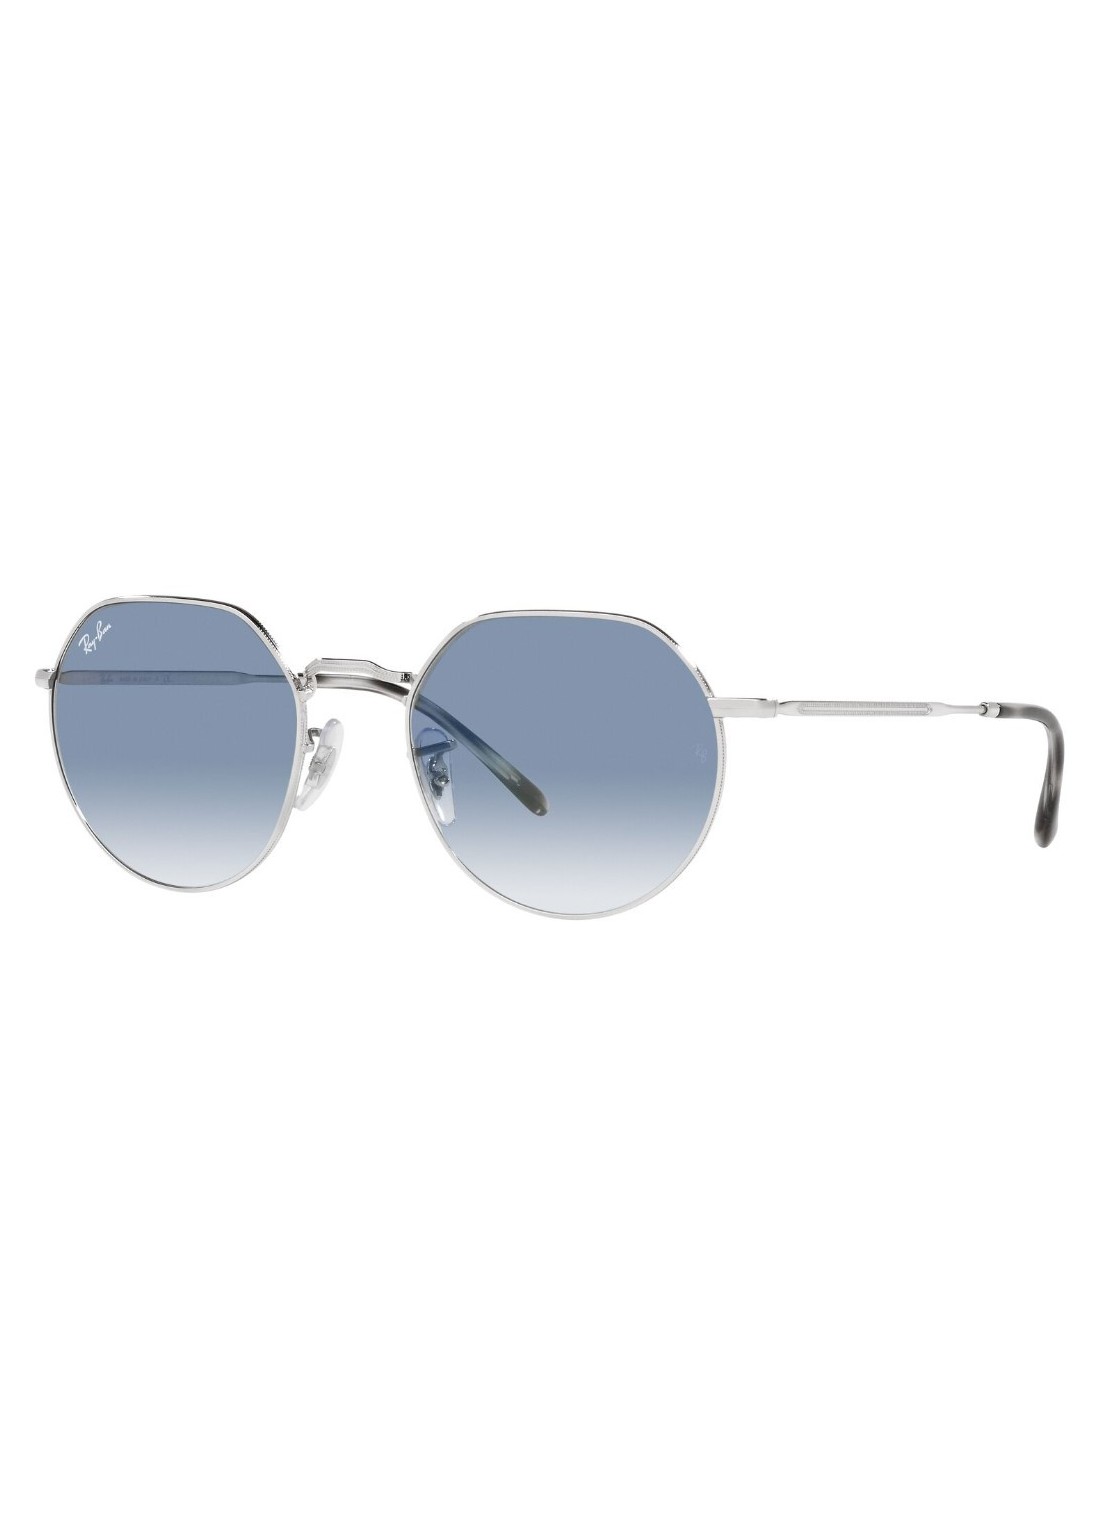 Gafas rayban sunglasses woman 0rb3565 0rb3565 003 3f talla transparente
 